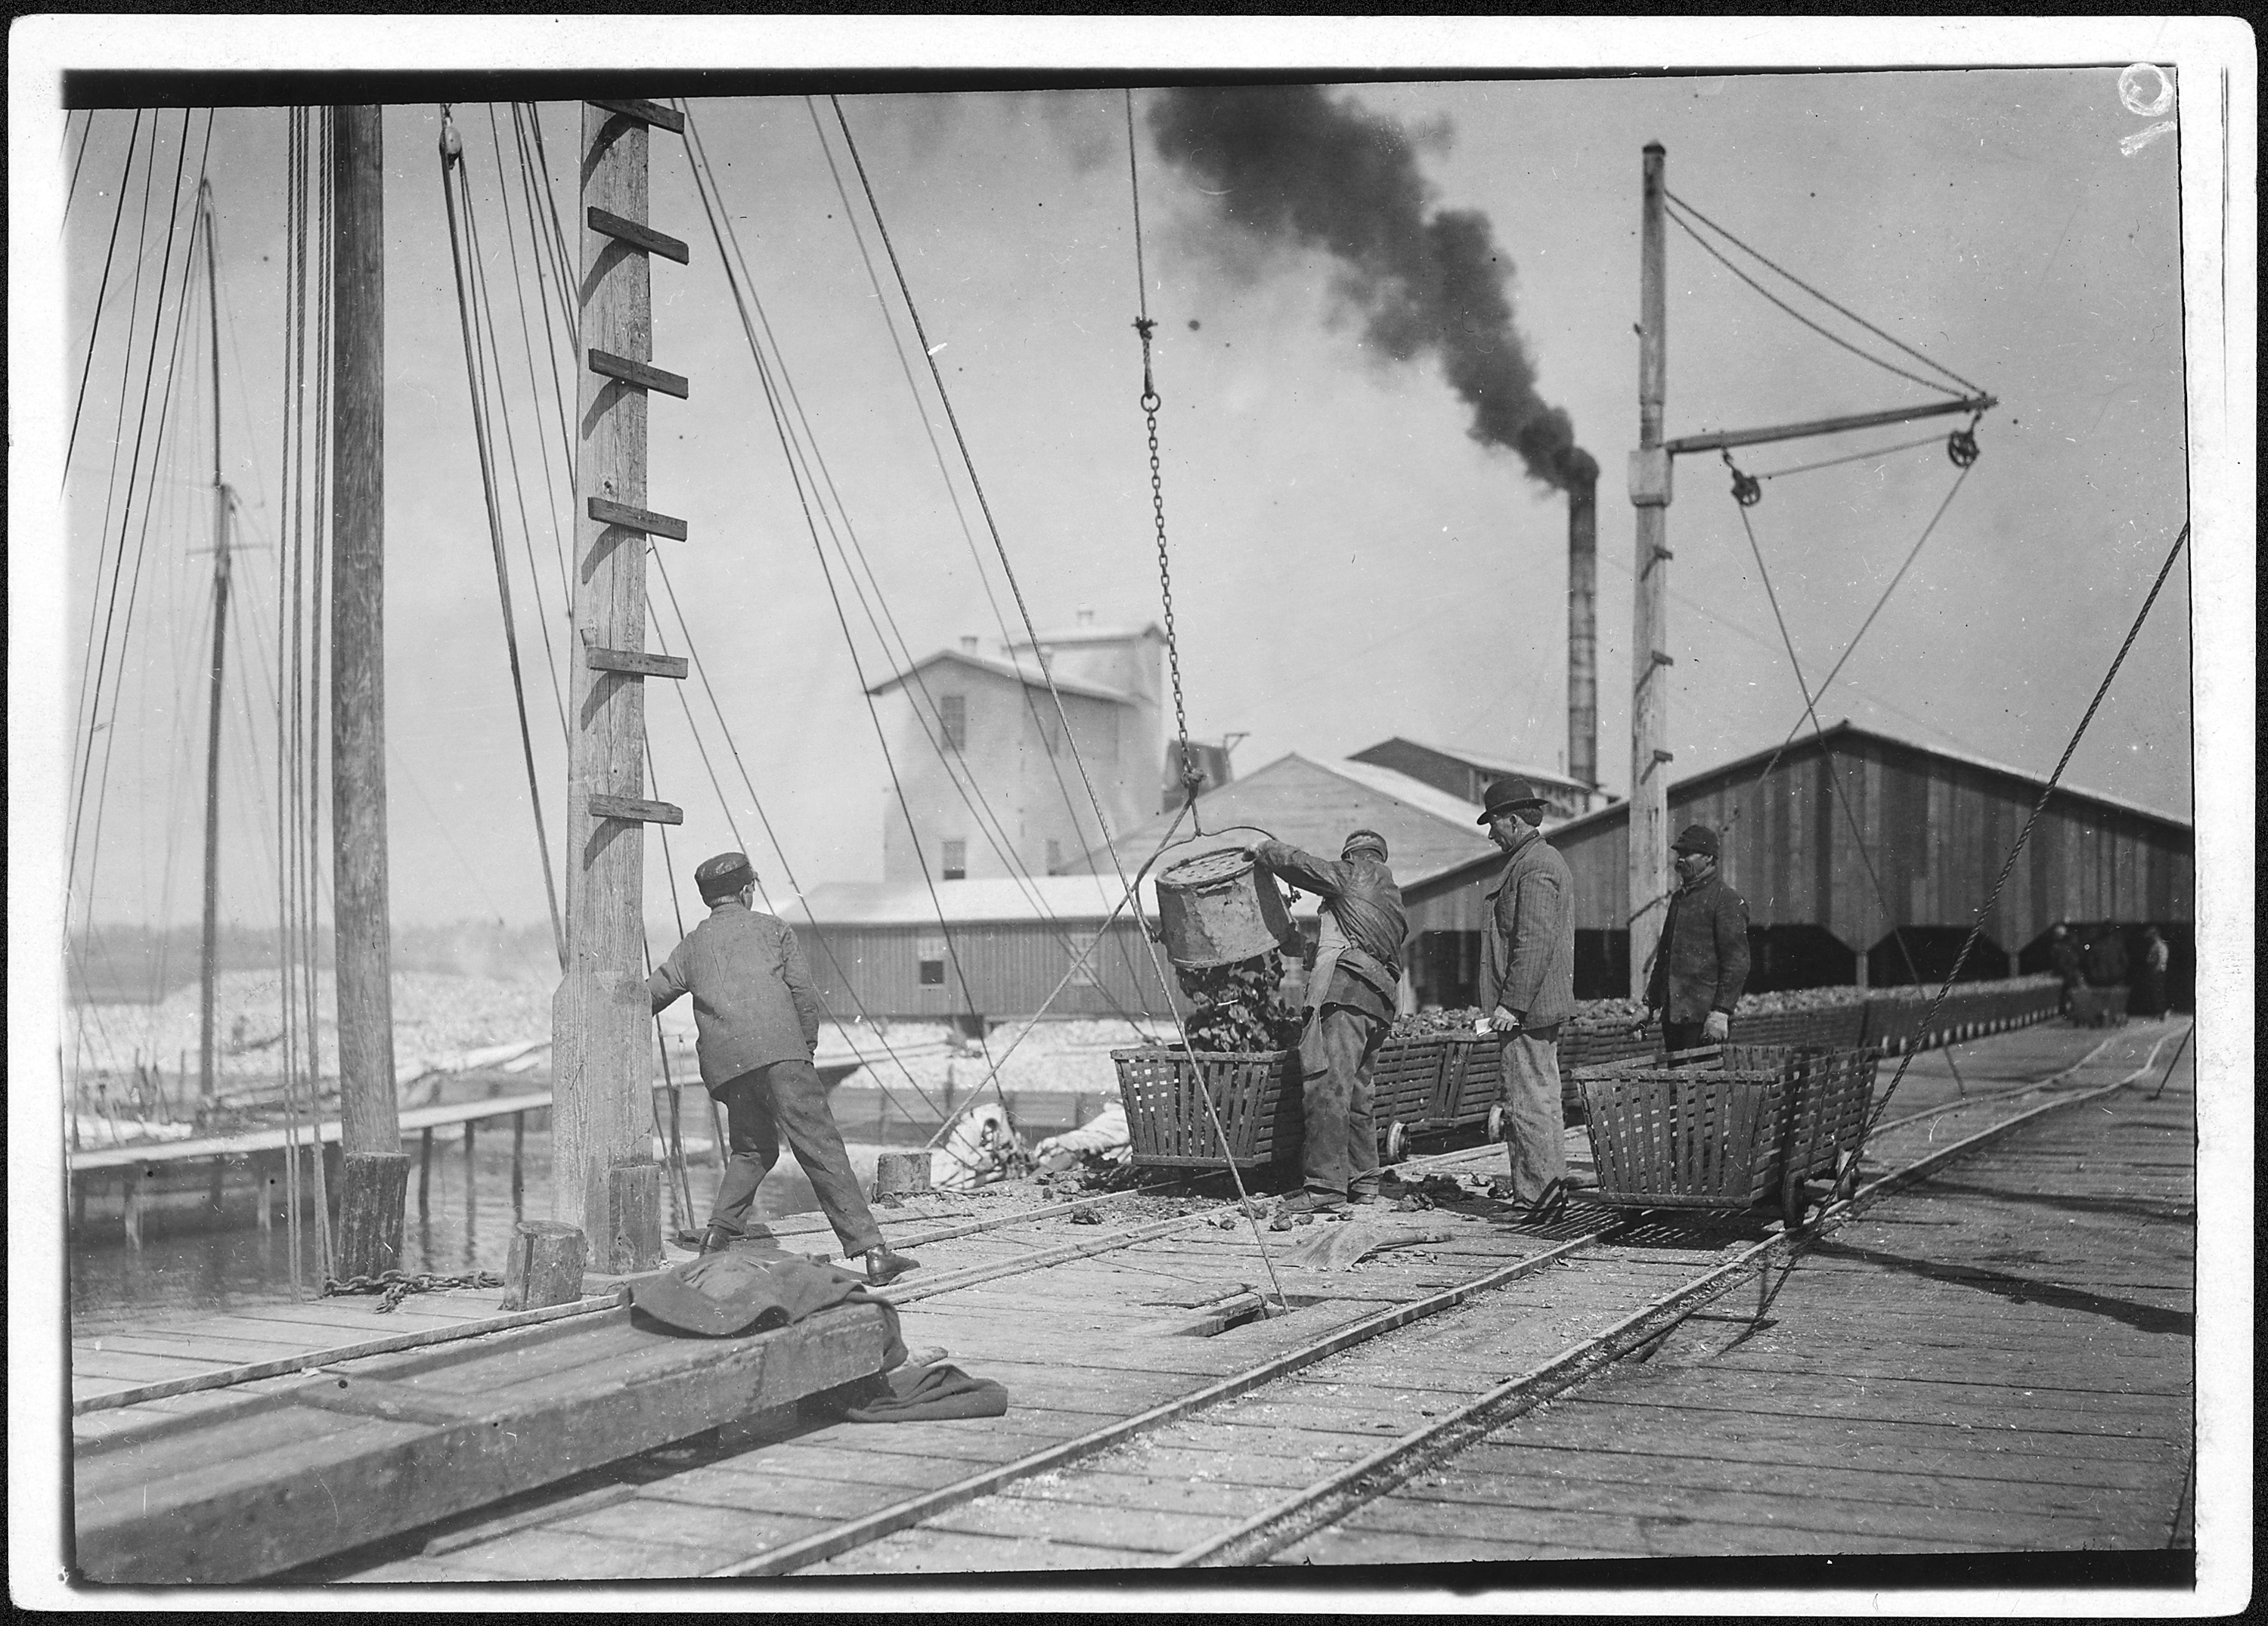 Unloading oysters on the dock. Alabama Canning Co. Bayou La Batre, Ala. - NARA - 523399